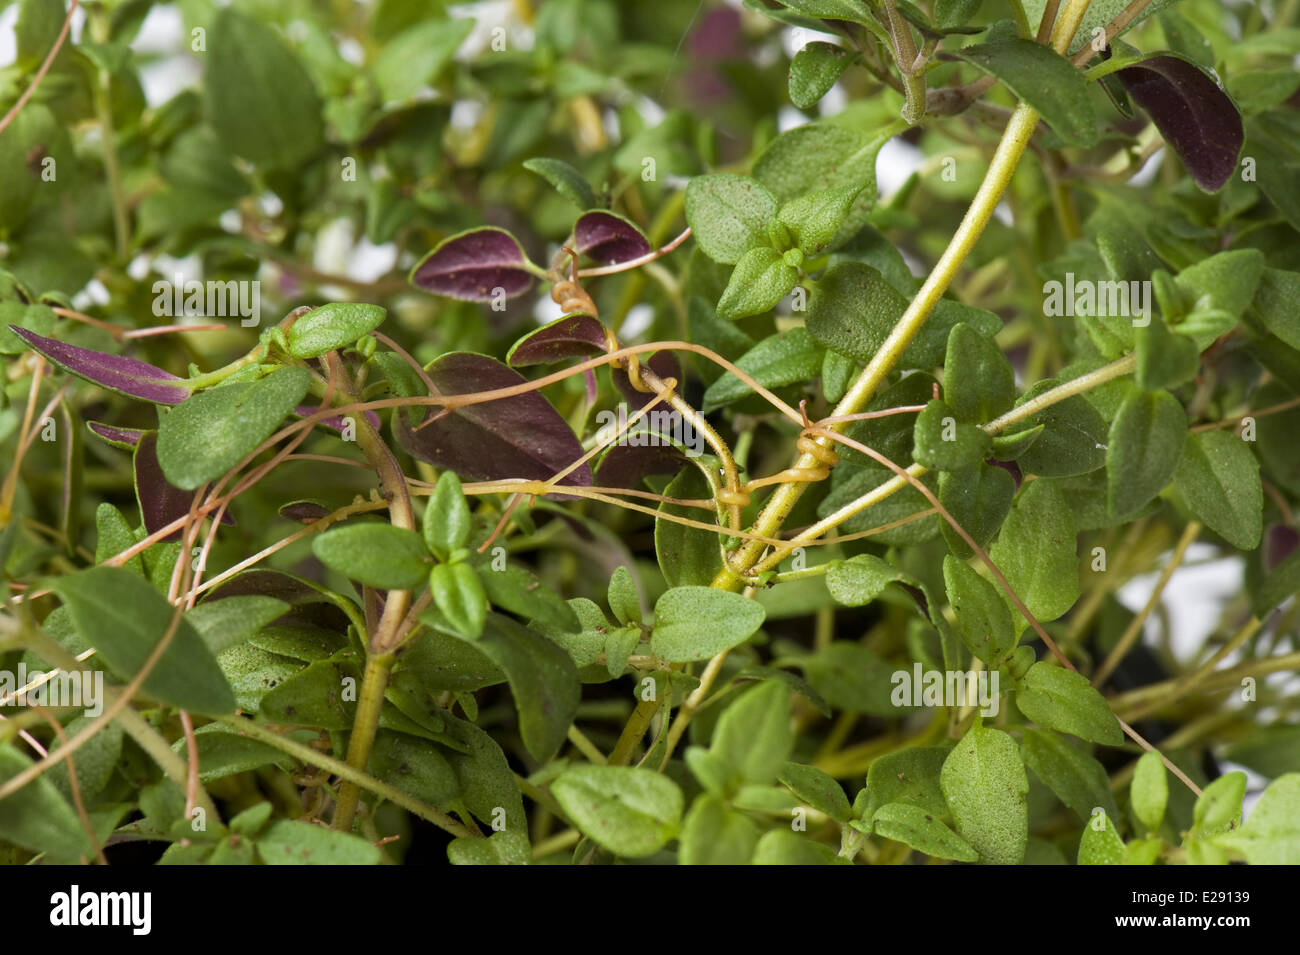 European dodder, Cuscuta europaea, a parasitic plant on a herd thyme plant in a pot Stock Photo